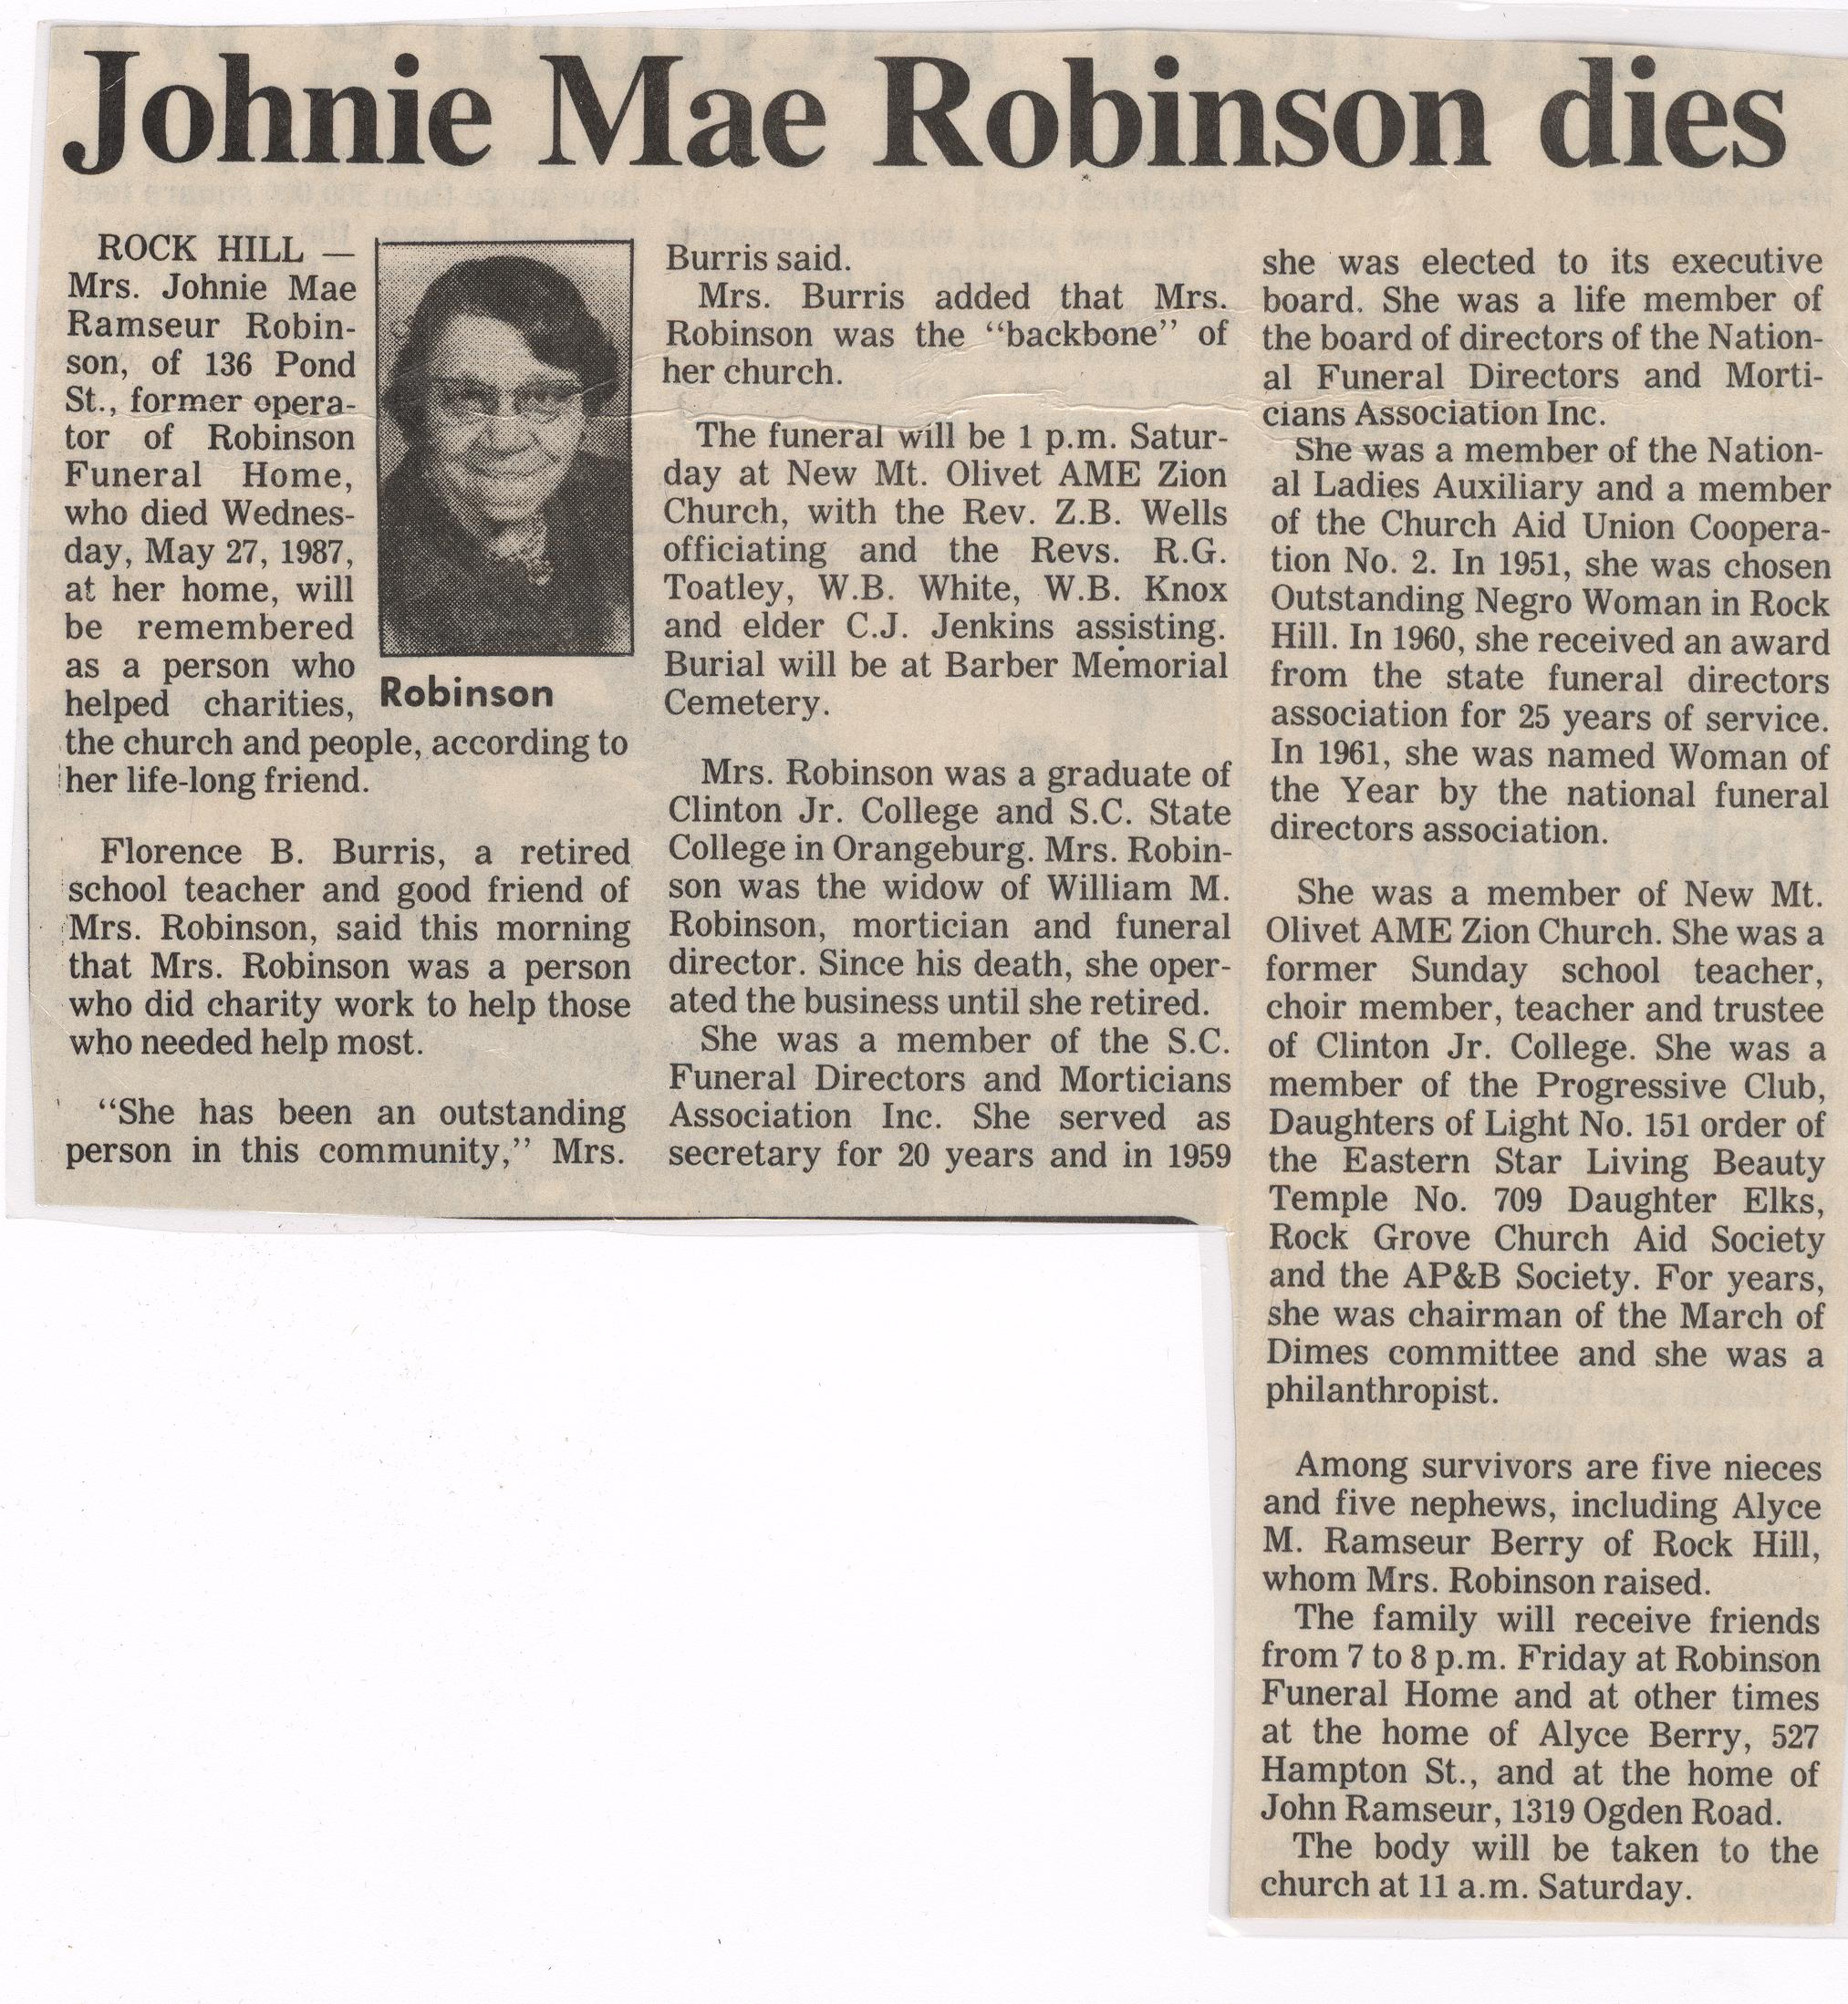 OBITUARY OF JOHNIE MAE ROBINSON - HERALD